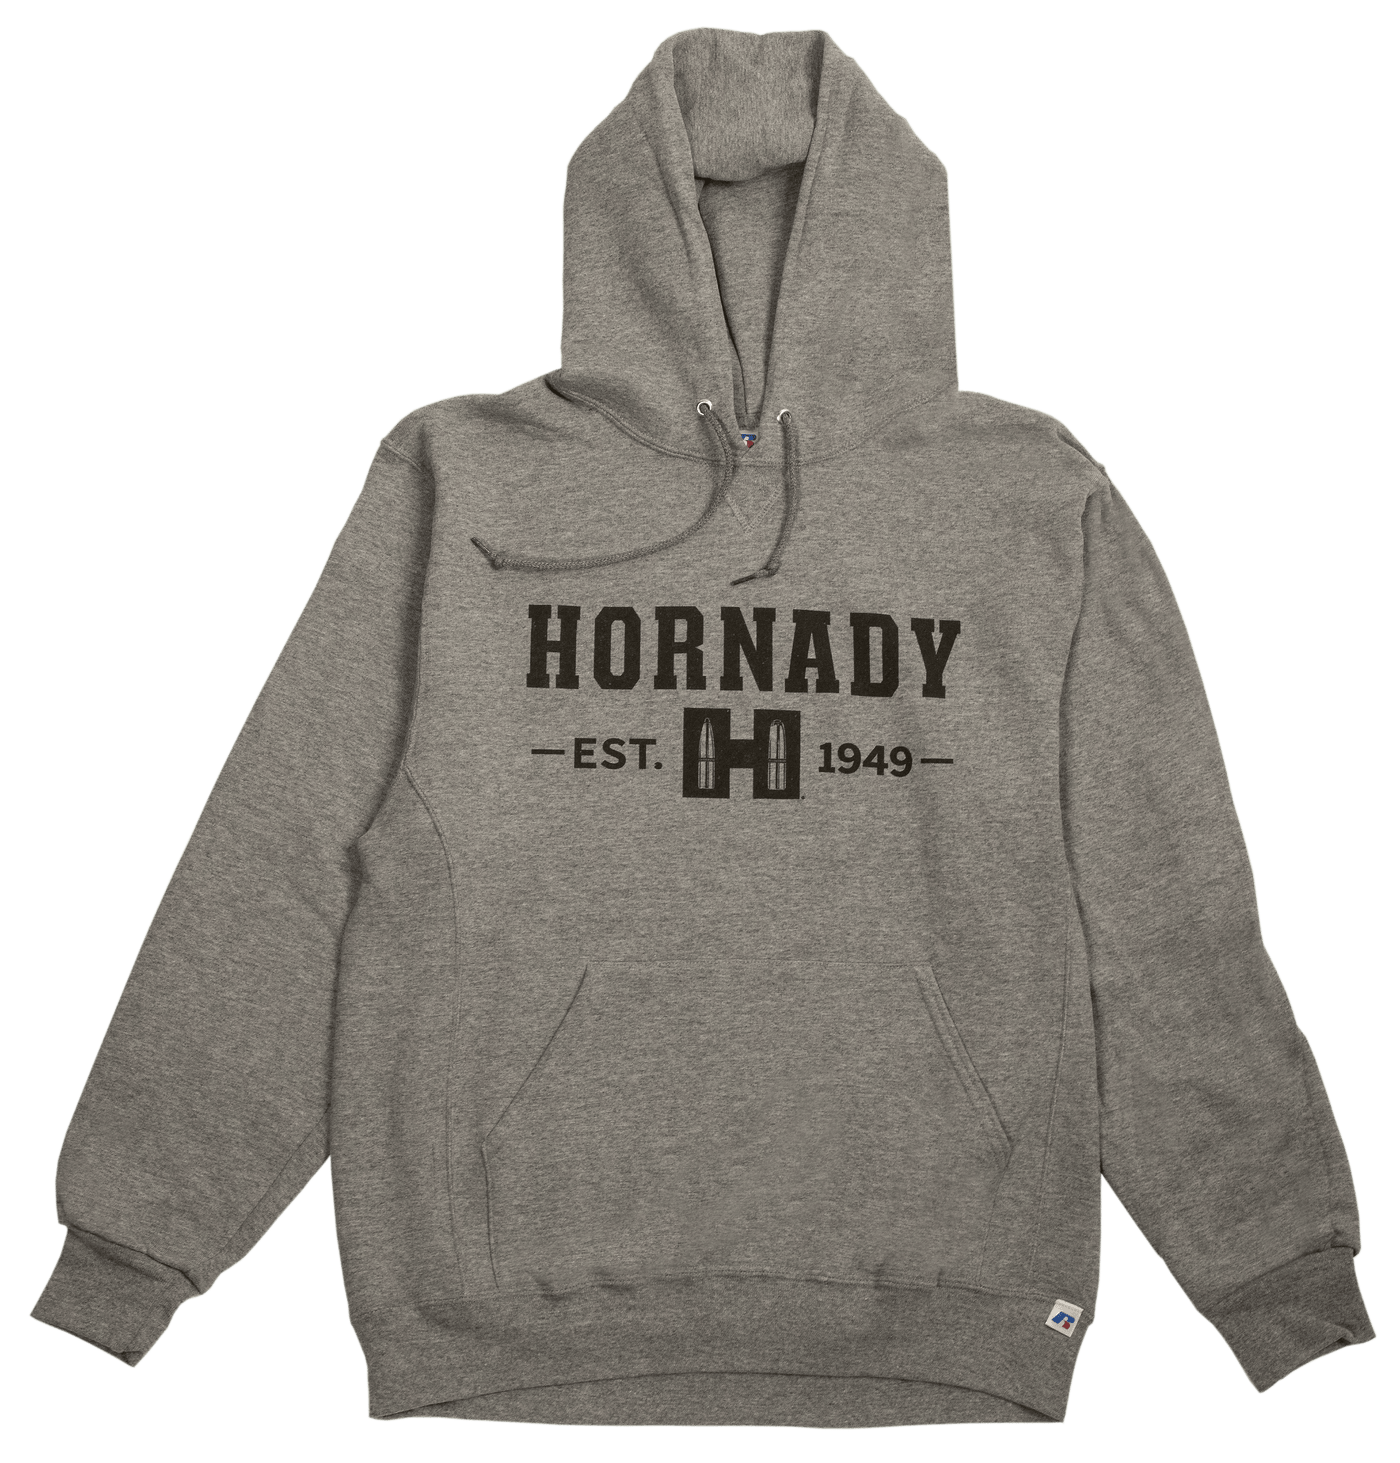 Hornady Hornady Hornady Hoodie, Horn 99595xxxxl Hornady Gray  Hoodie 4x Accessories